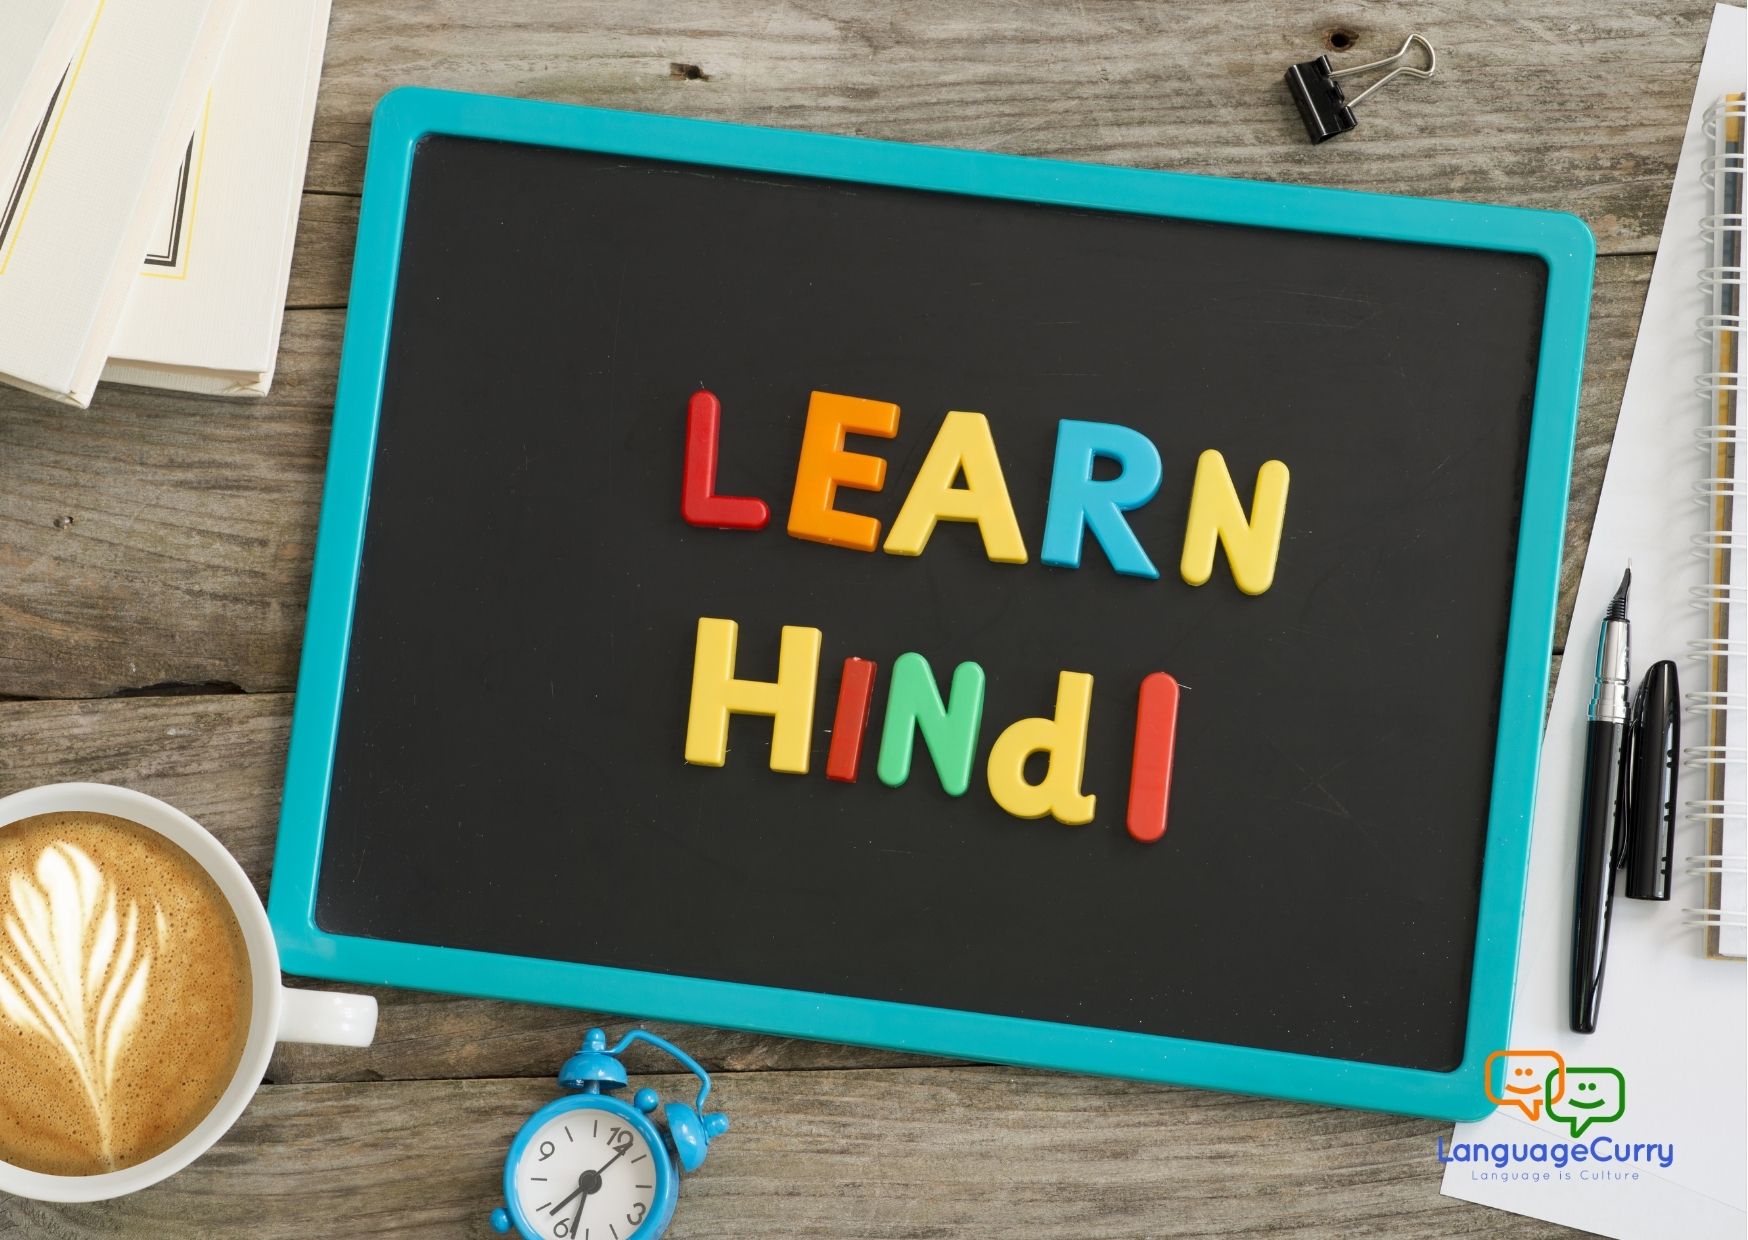 Learn Hindi written on a small black board